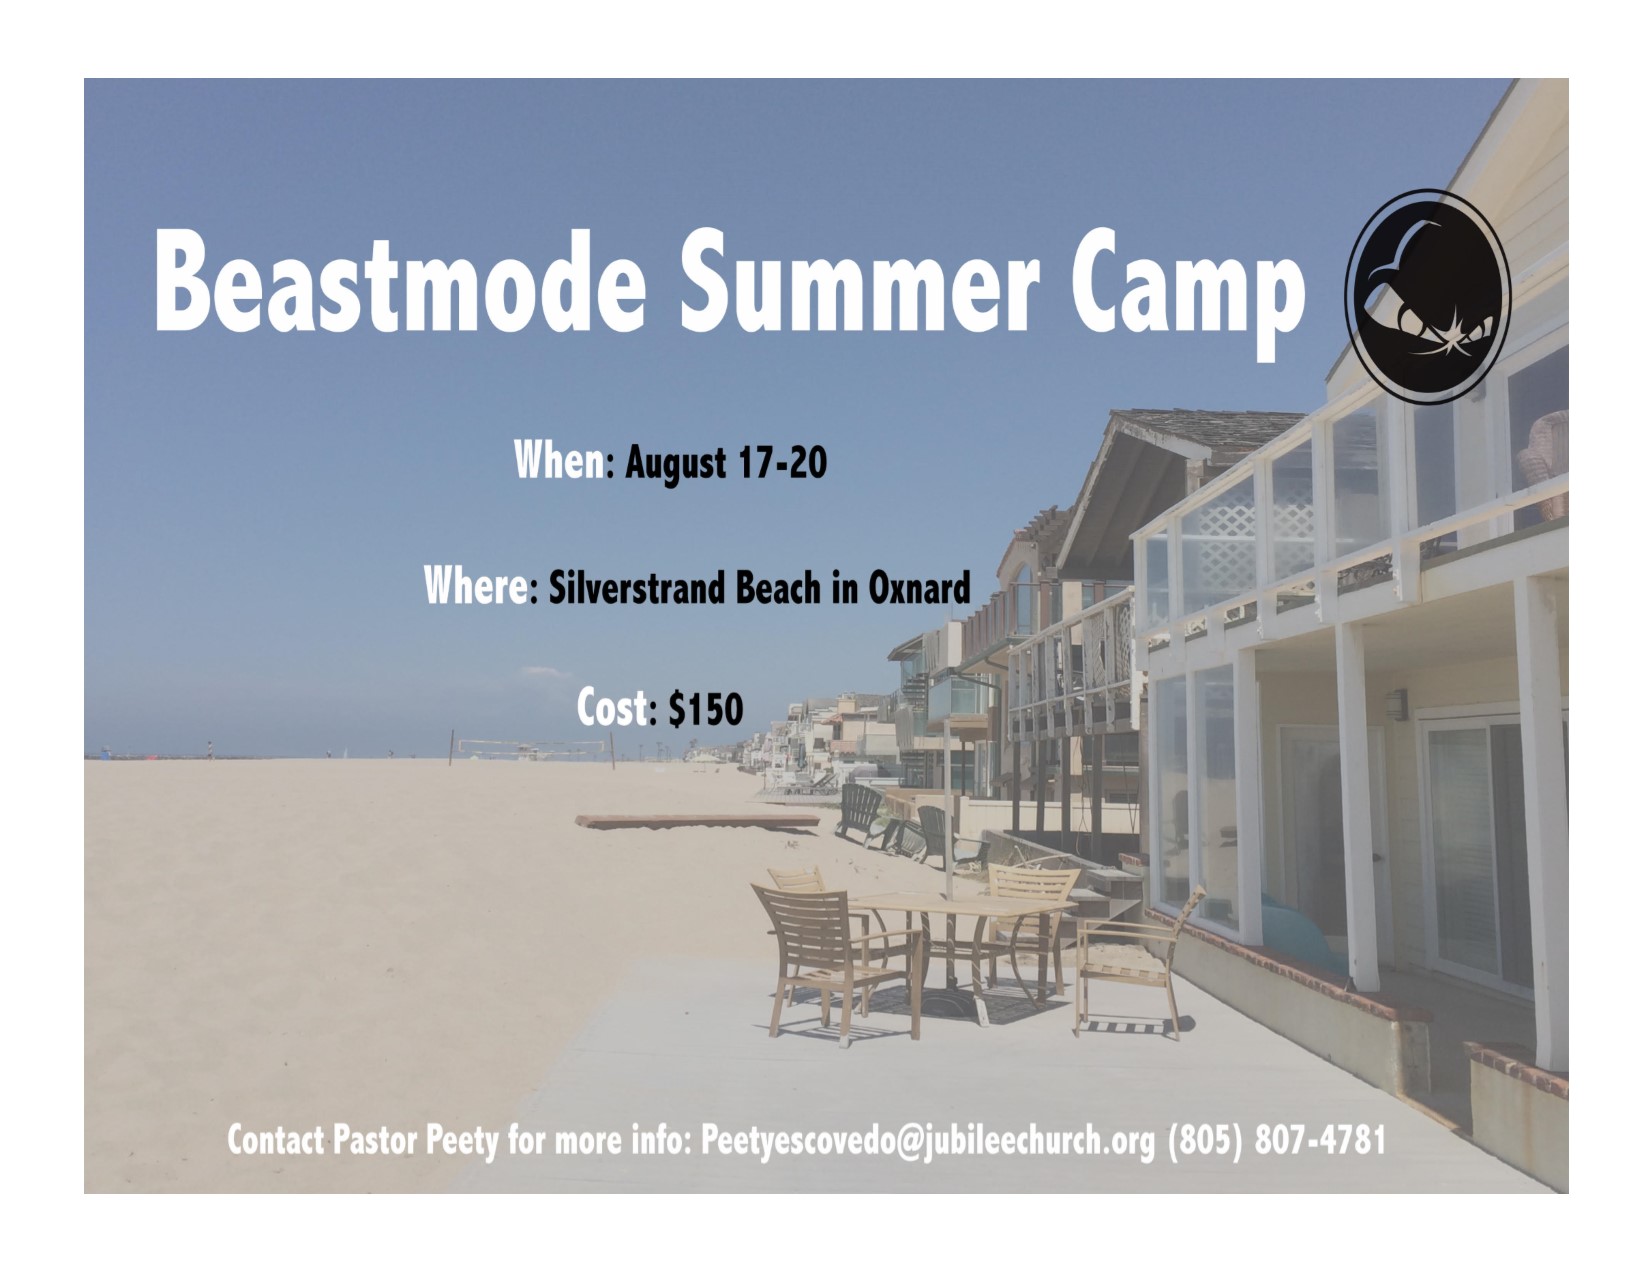 Beastmode Summer Camp